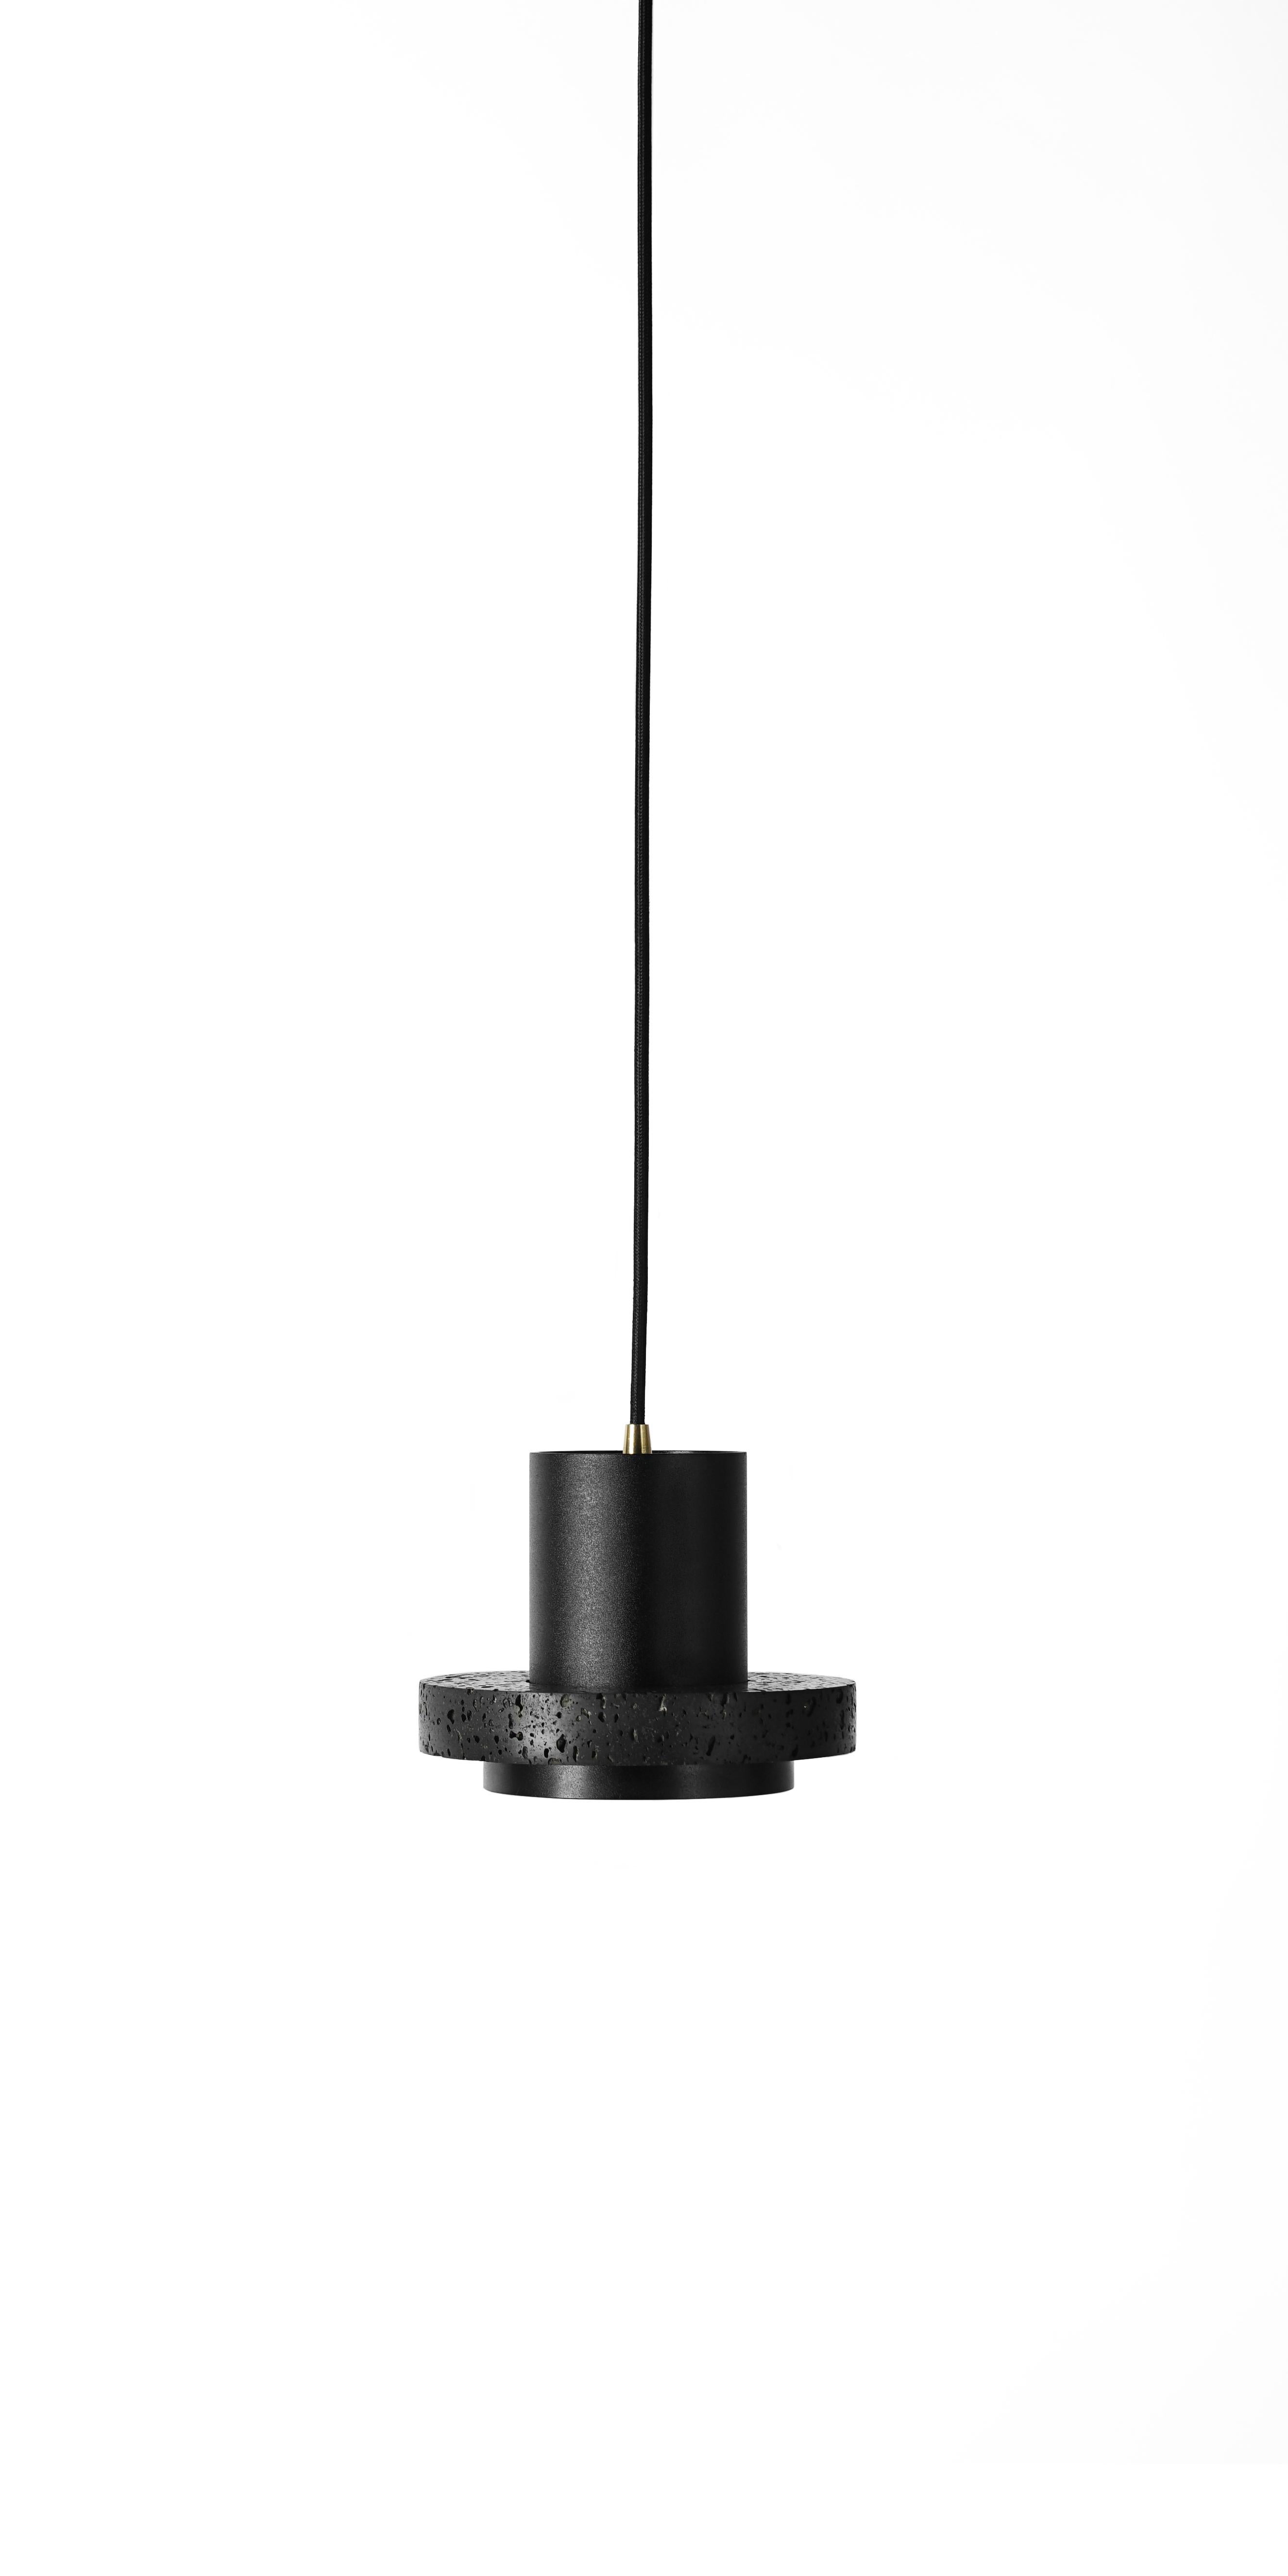 Pendant lamps 'Calm' by Buzao x Bentu design.
Black lava stone

Three different sizes:
H 14.5 cm - D 18 cm 
H 14.5 cm - D 28 cm 
H 14.5 cm - D 33 cm

(Sold individually)

19,5 cm high, 10 cm diameter
Wire: 2 meters black (adjustable) 

Lamp type: